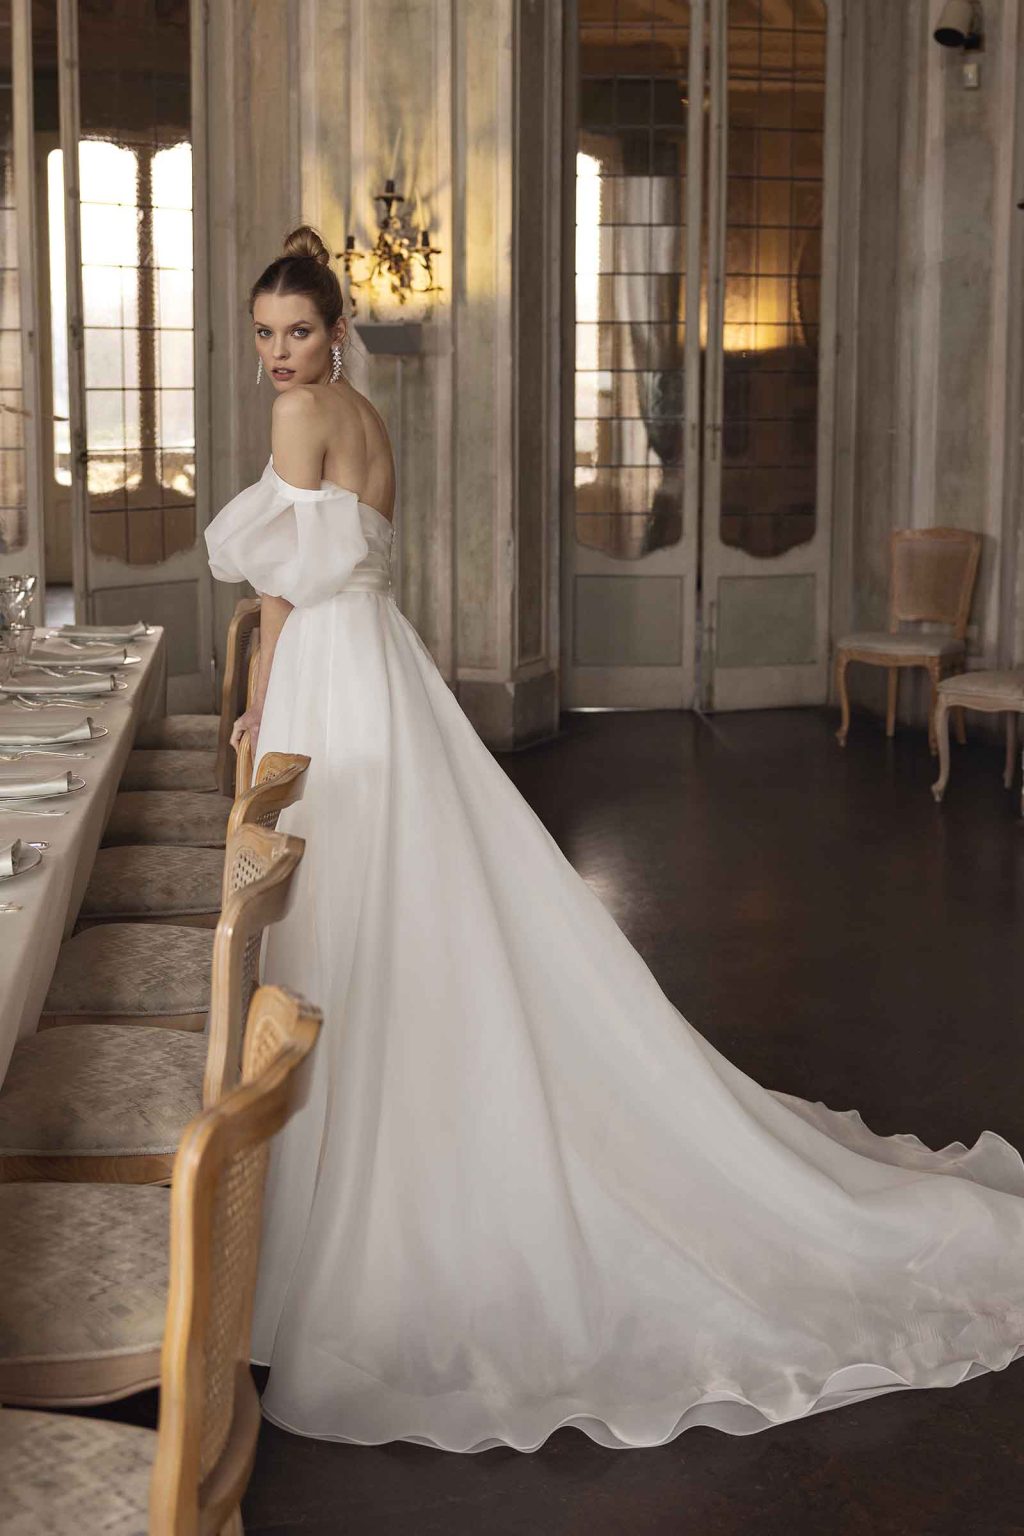 Lace A-line Wedding Dress With Deep V-neckline And High Slit ...